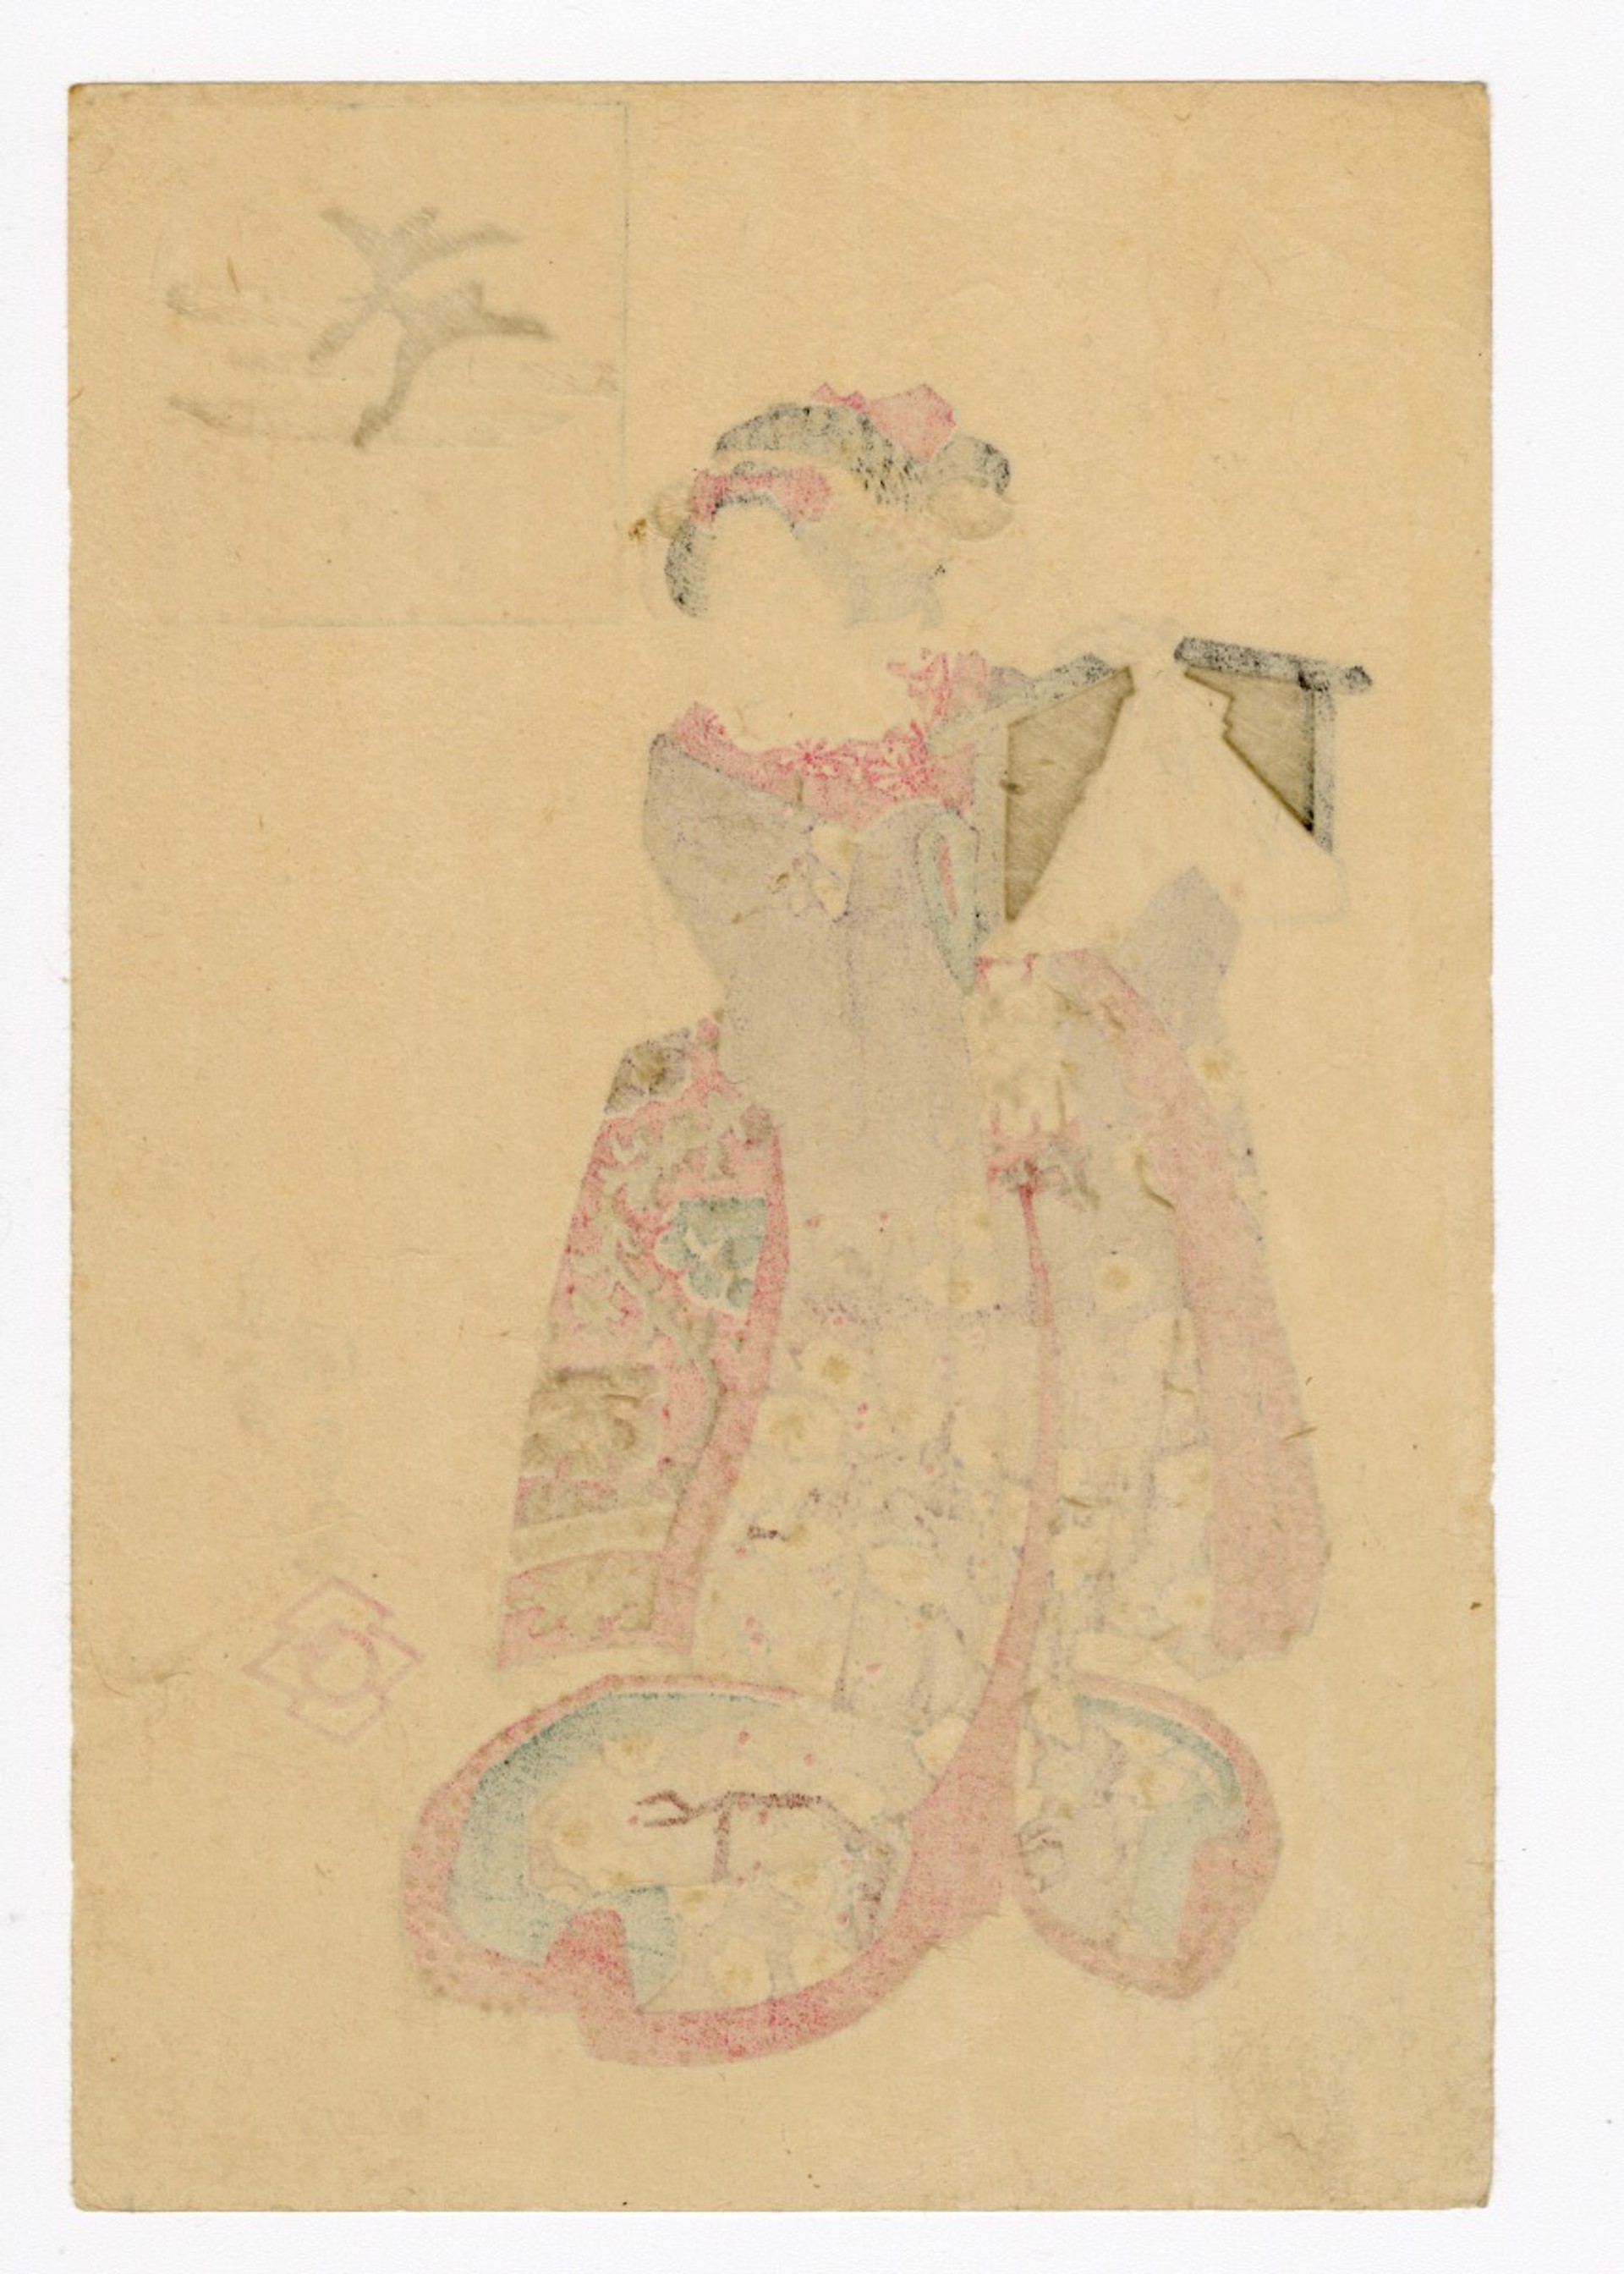 Surimono Set of 6 Koban Actor prints by Kunisada